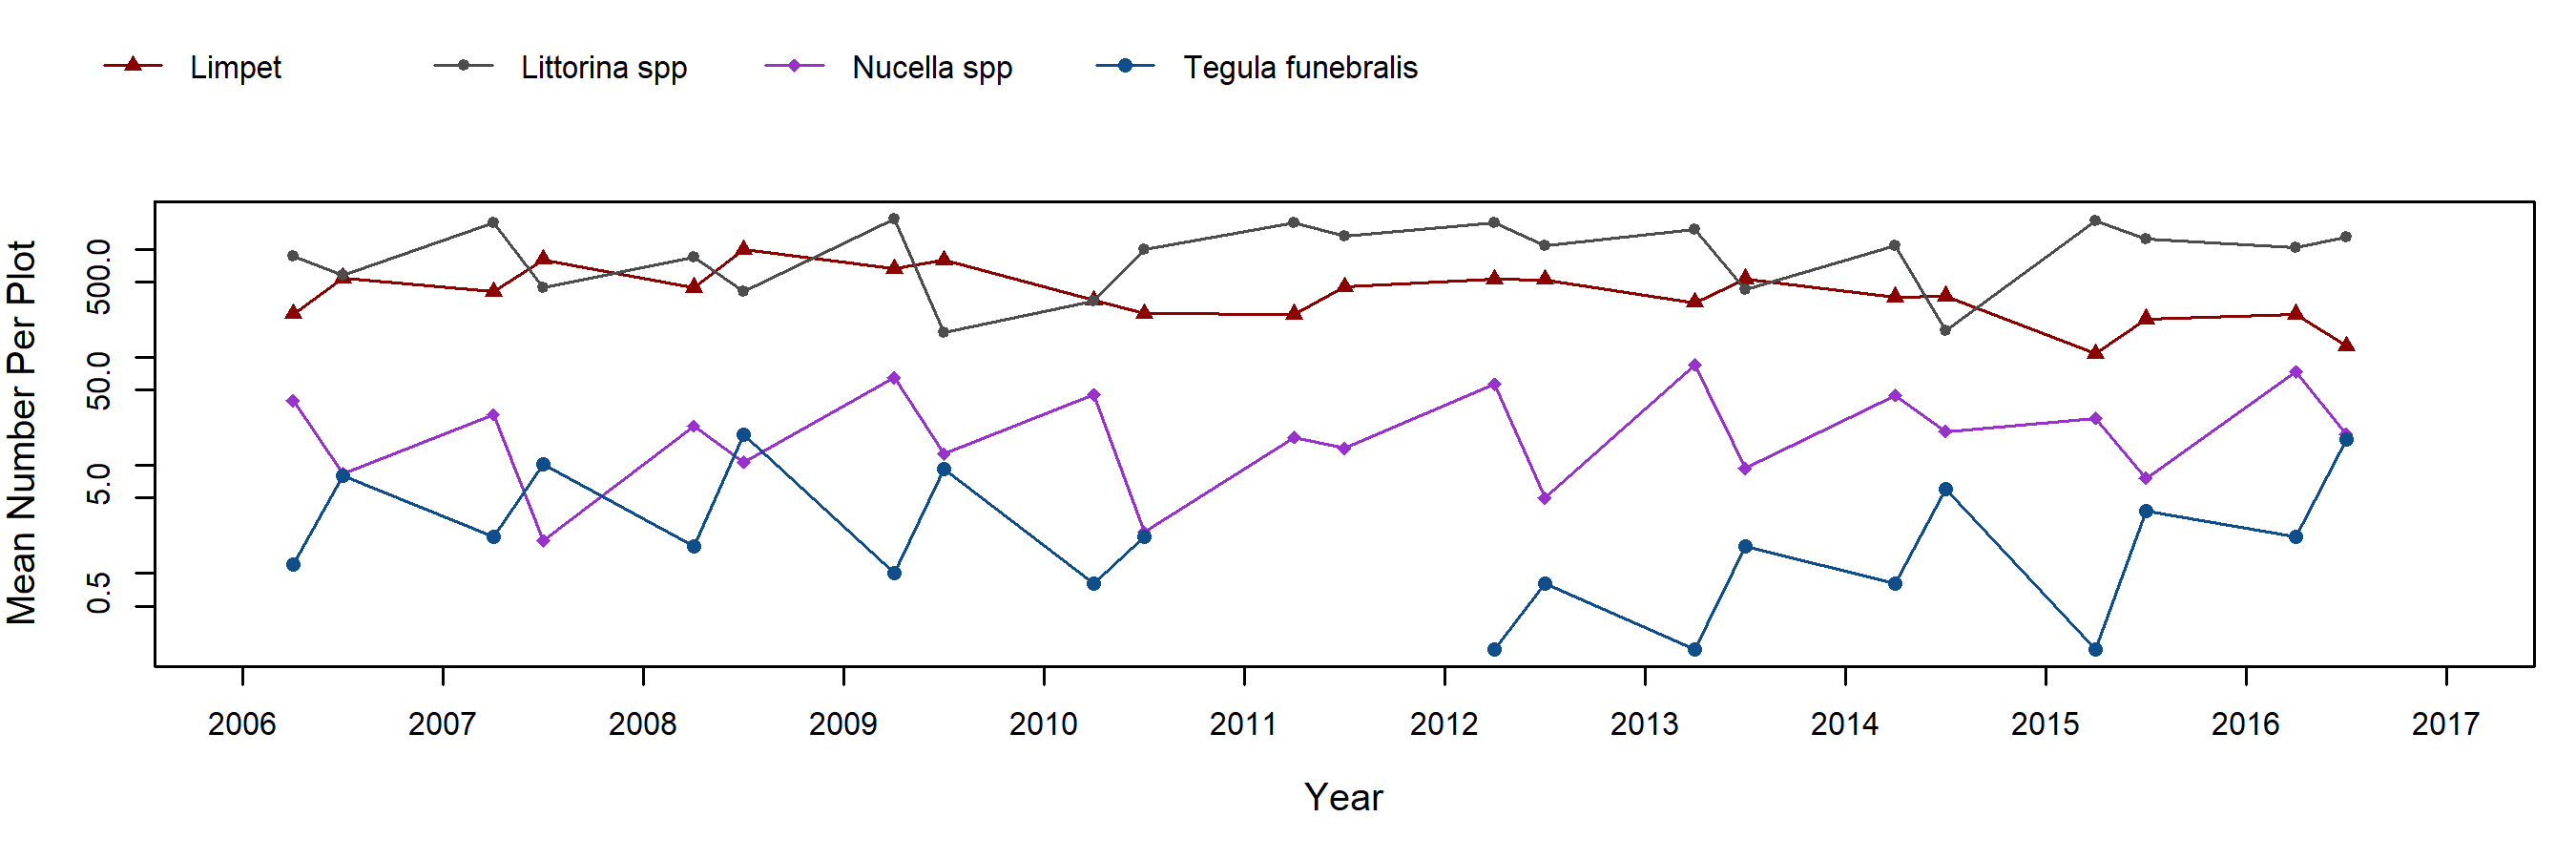 Enderts barnacle trend plot